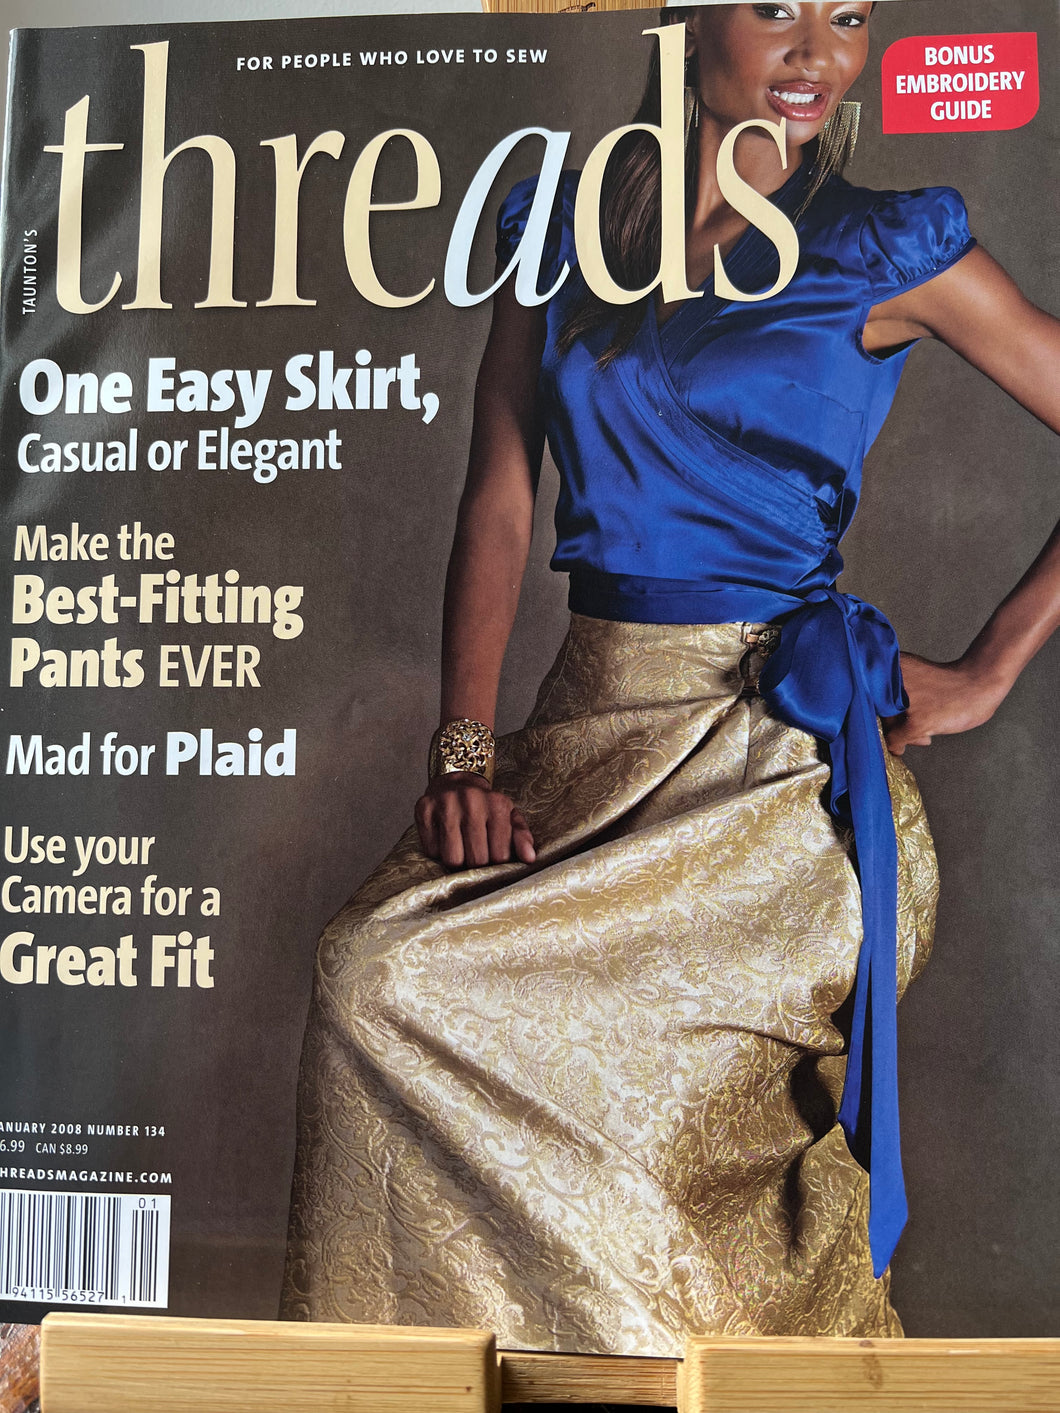 Threads Magazine #134 January 2008